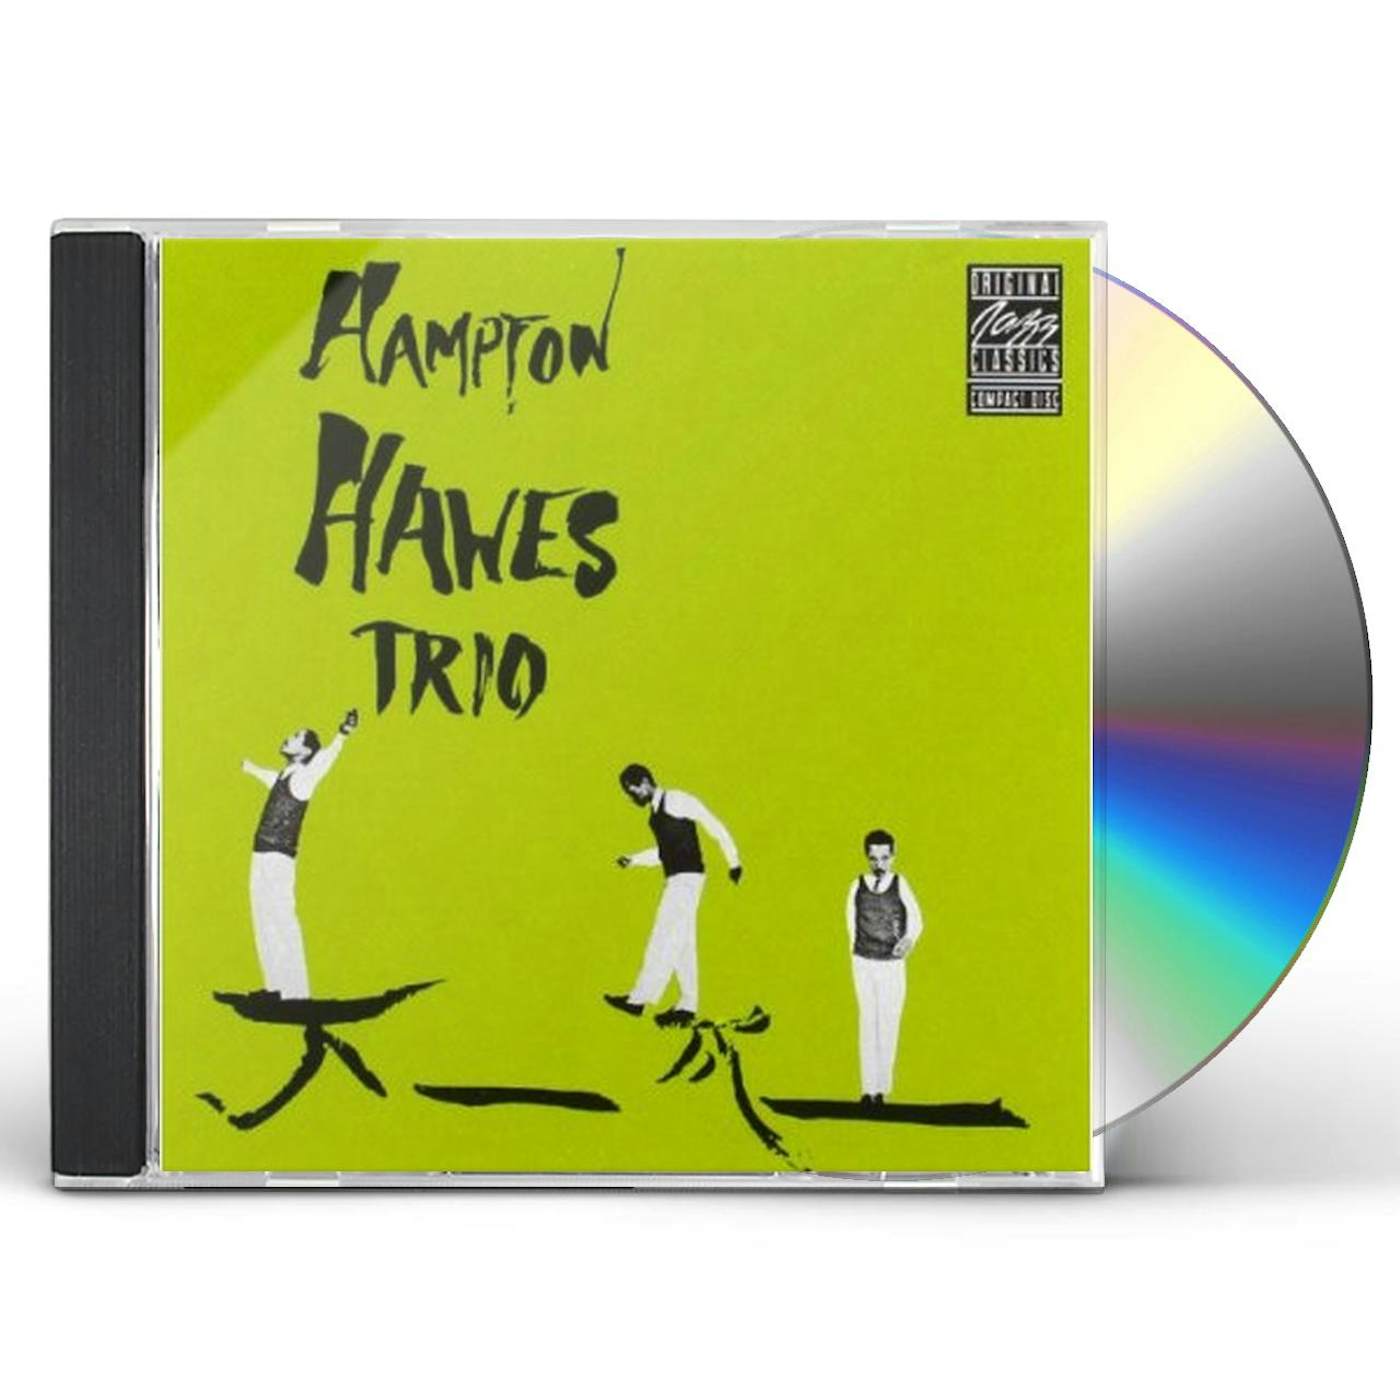 Hampton Hawes TRIO 1 CD